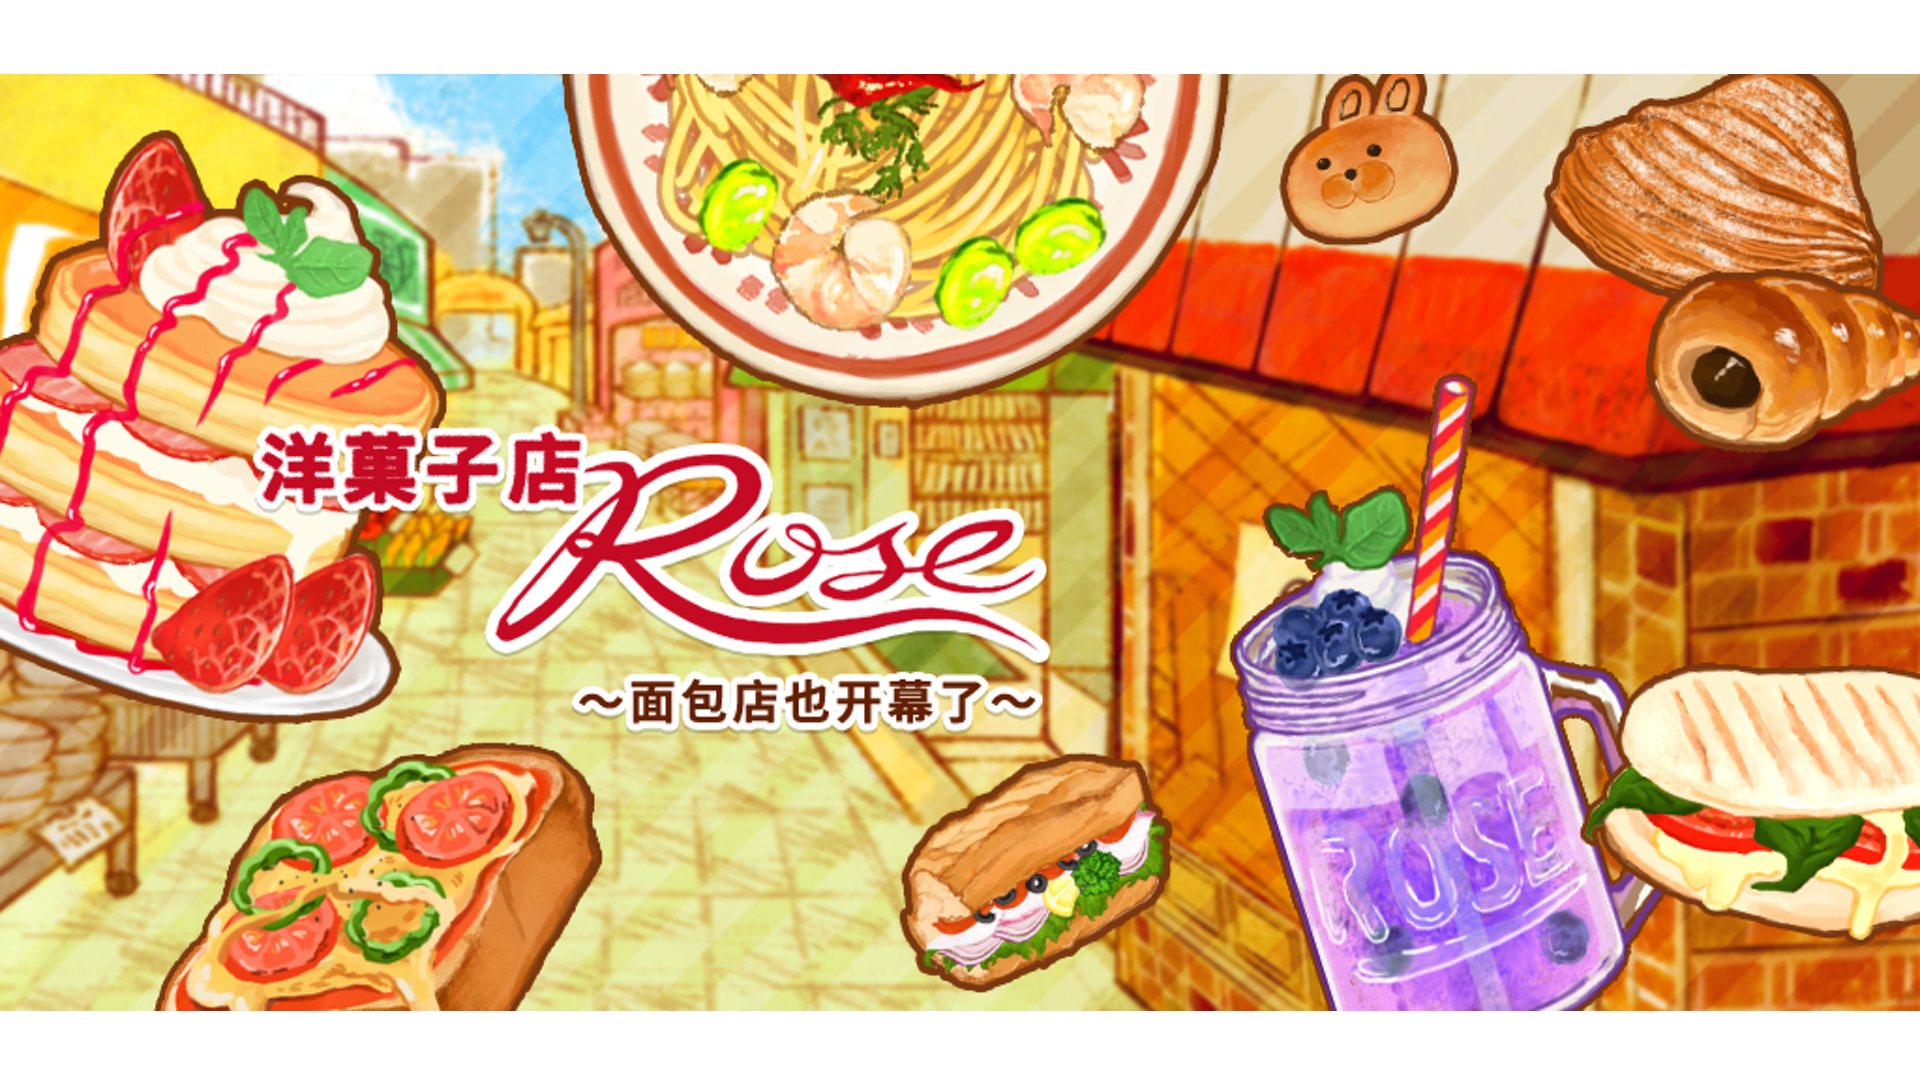 Banner of ร้านขนมหวาน ROSE Bakery 1.1.77